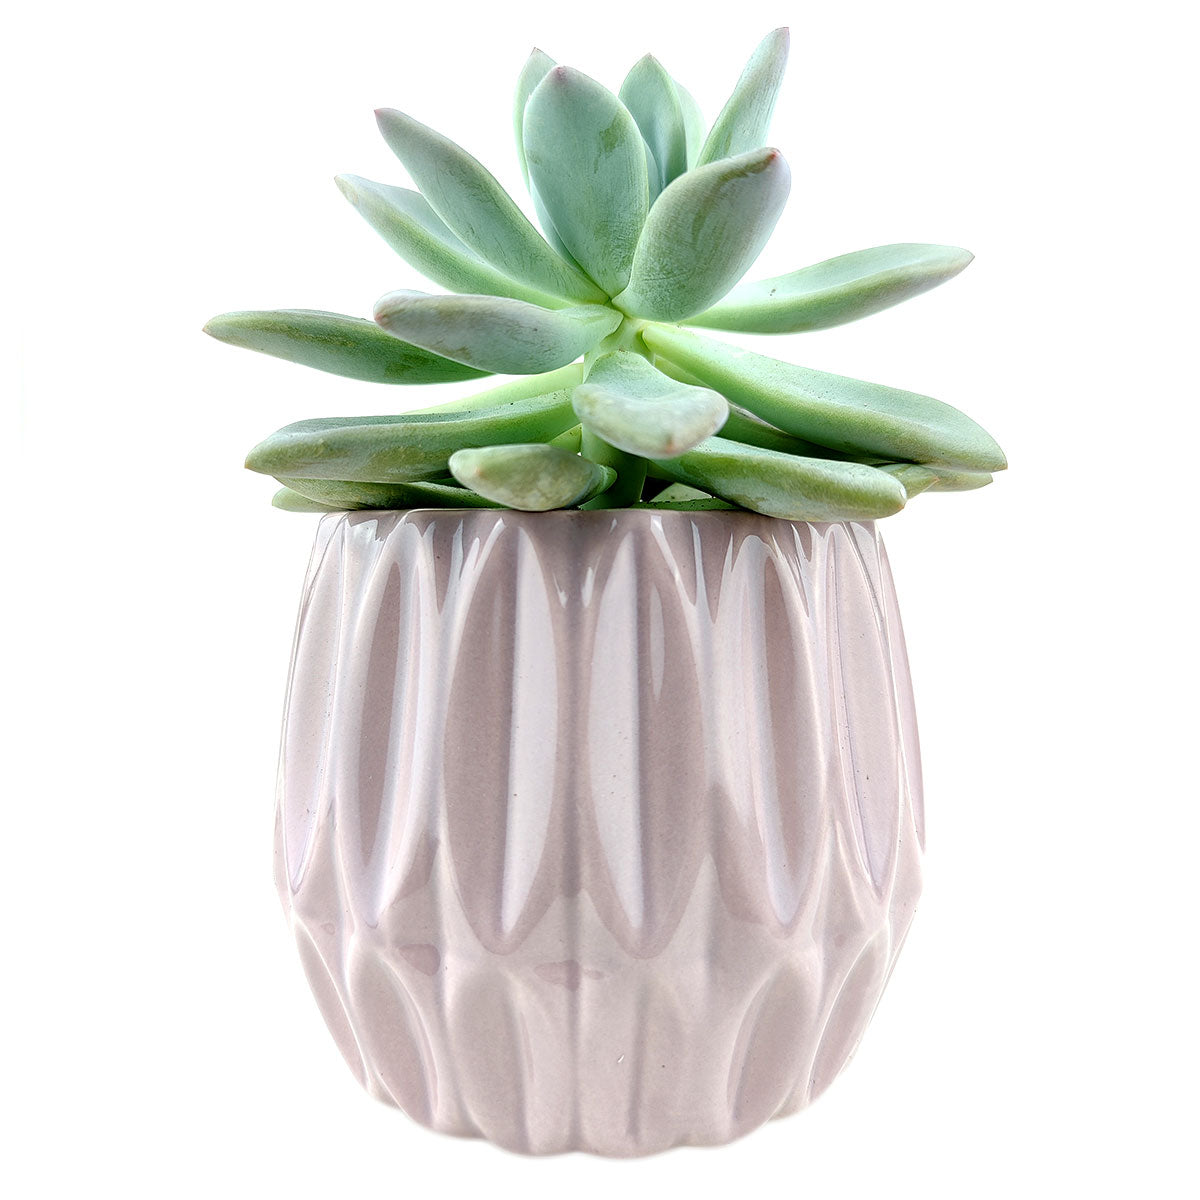 Pink Optical Pot for sale, ceramic vase for home decor, ceramic succulent and cactus pots for sale, Succulent gift ideas